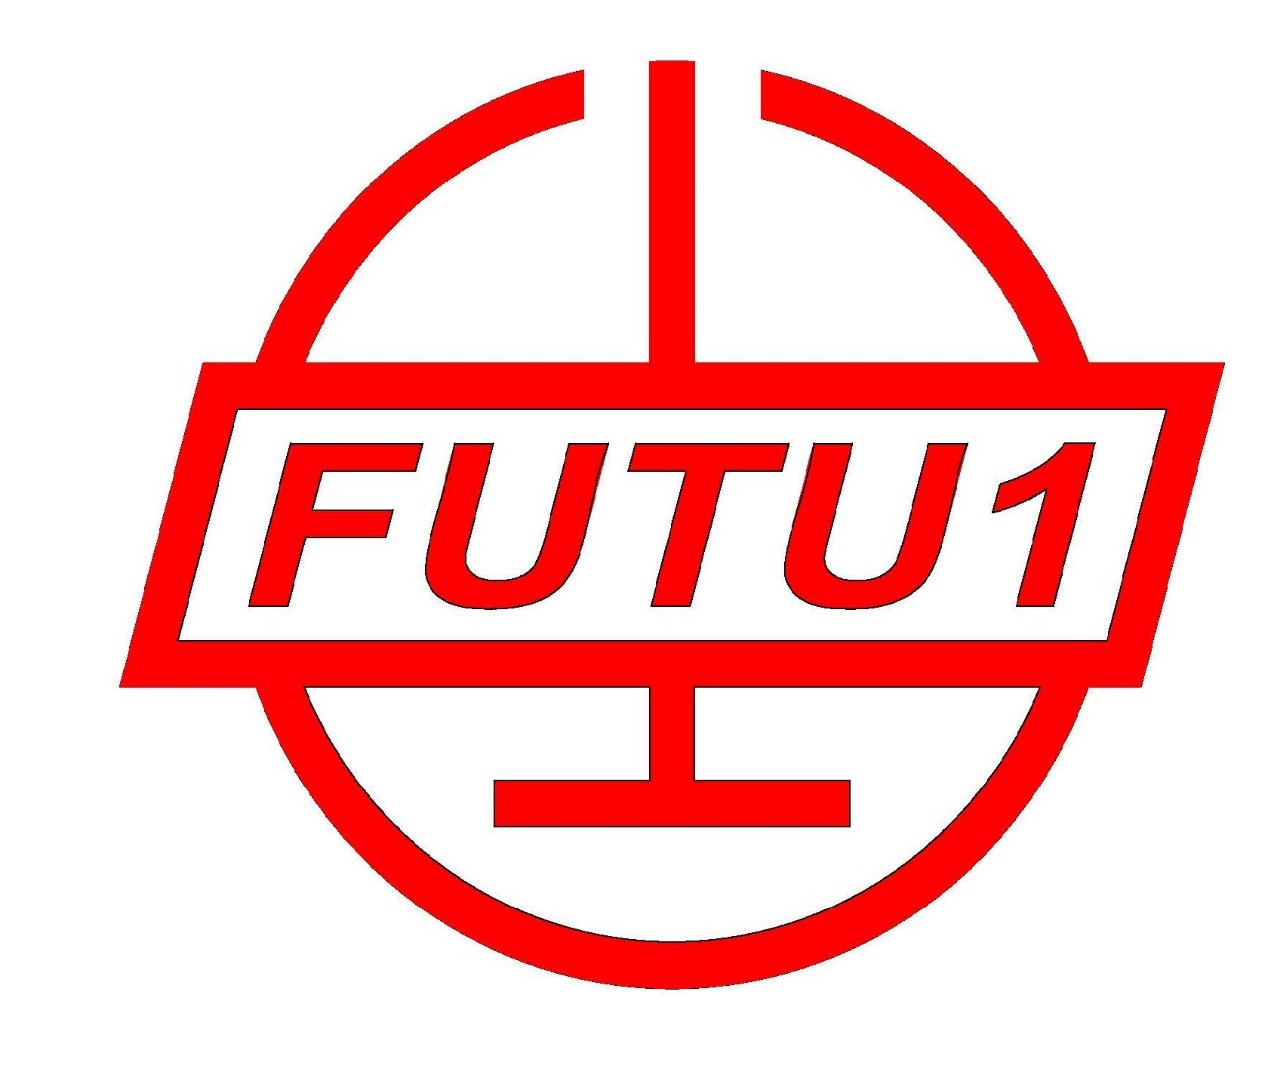 09/8/2023~11/08/2023: FUTU1 tham gia triển lãm Jetro tại Hà Nội